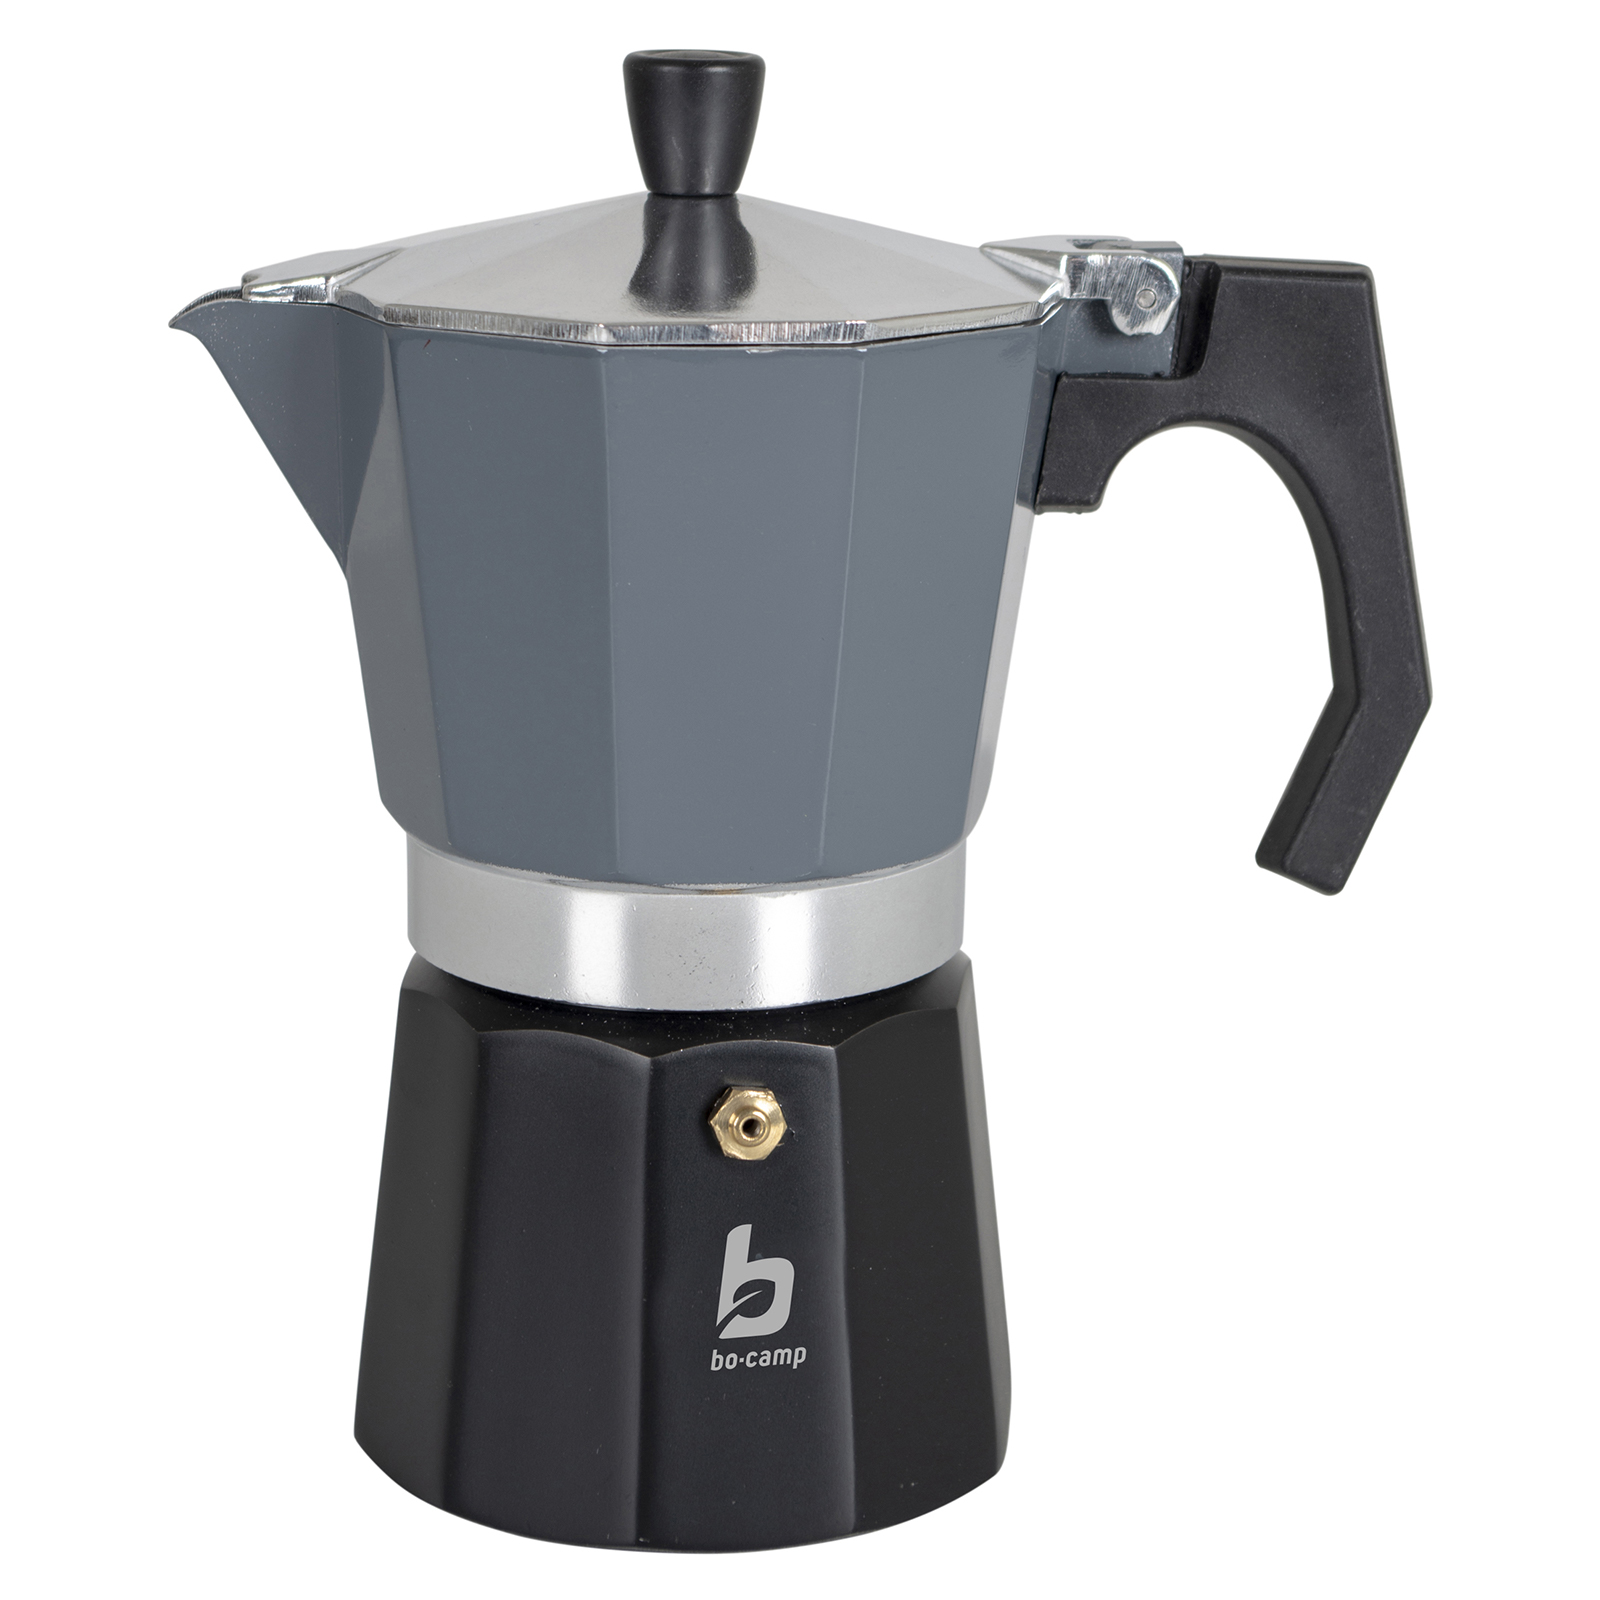 BO-CAMP Espressokocher Percolator - Kaffee Kocher Espresso Kanne Alu 2-6 Tassen